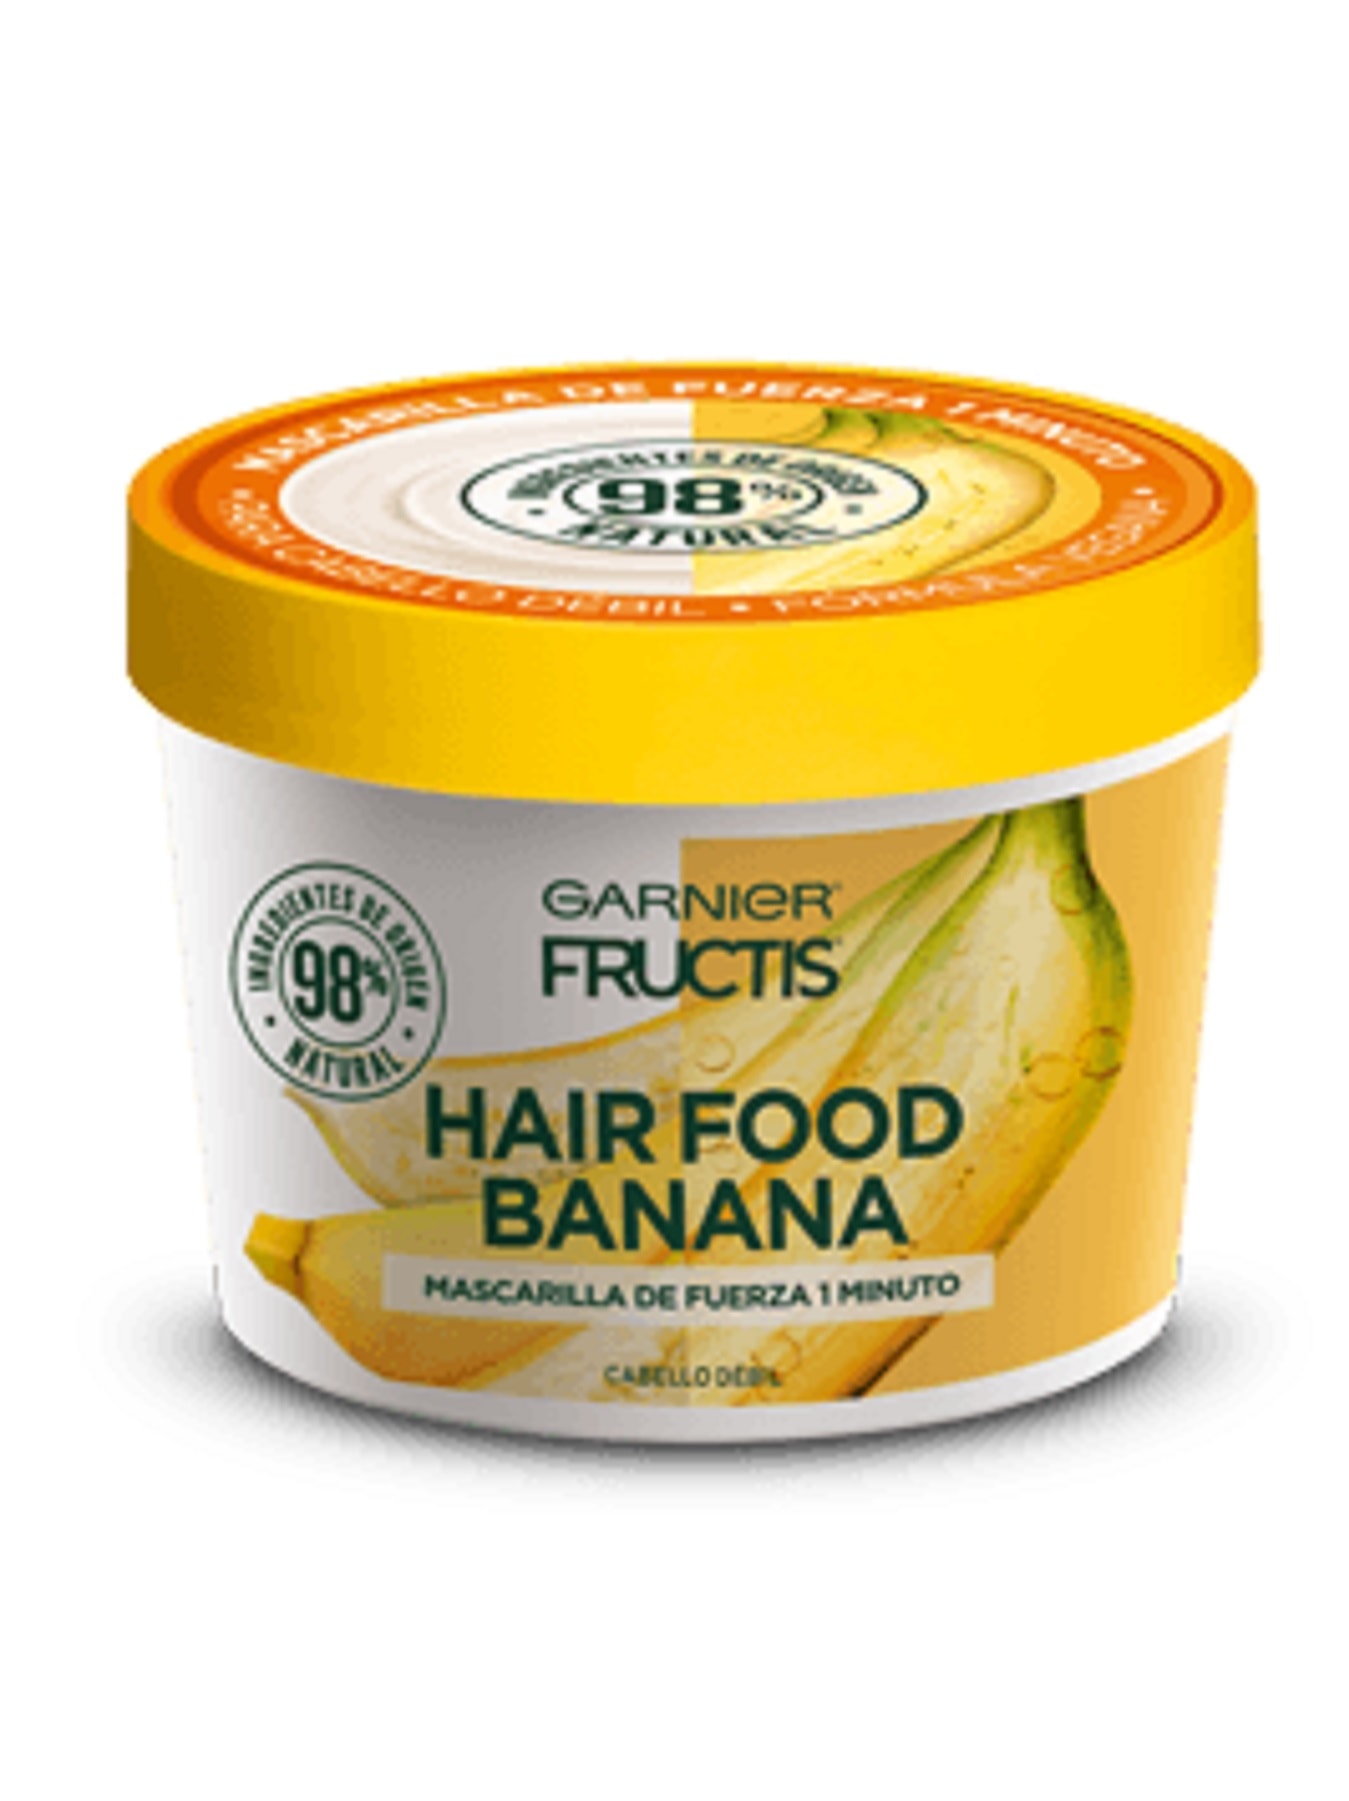 Hair food banana2